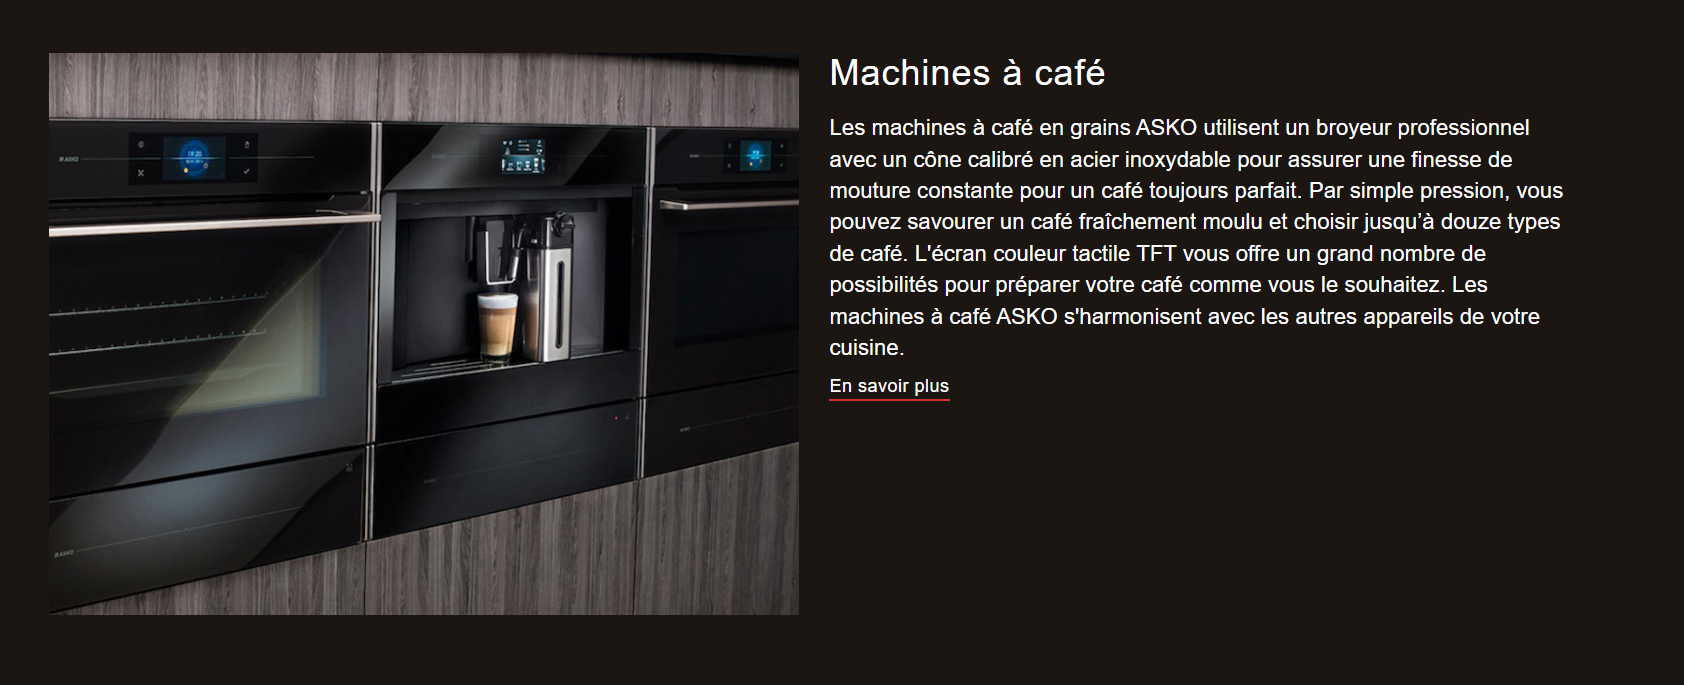 ASKO MACHINES A CAFES